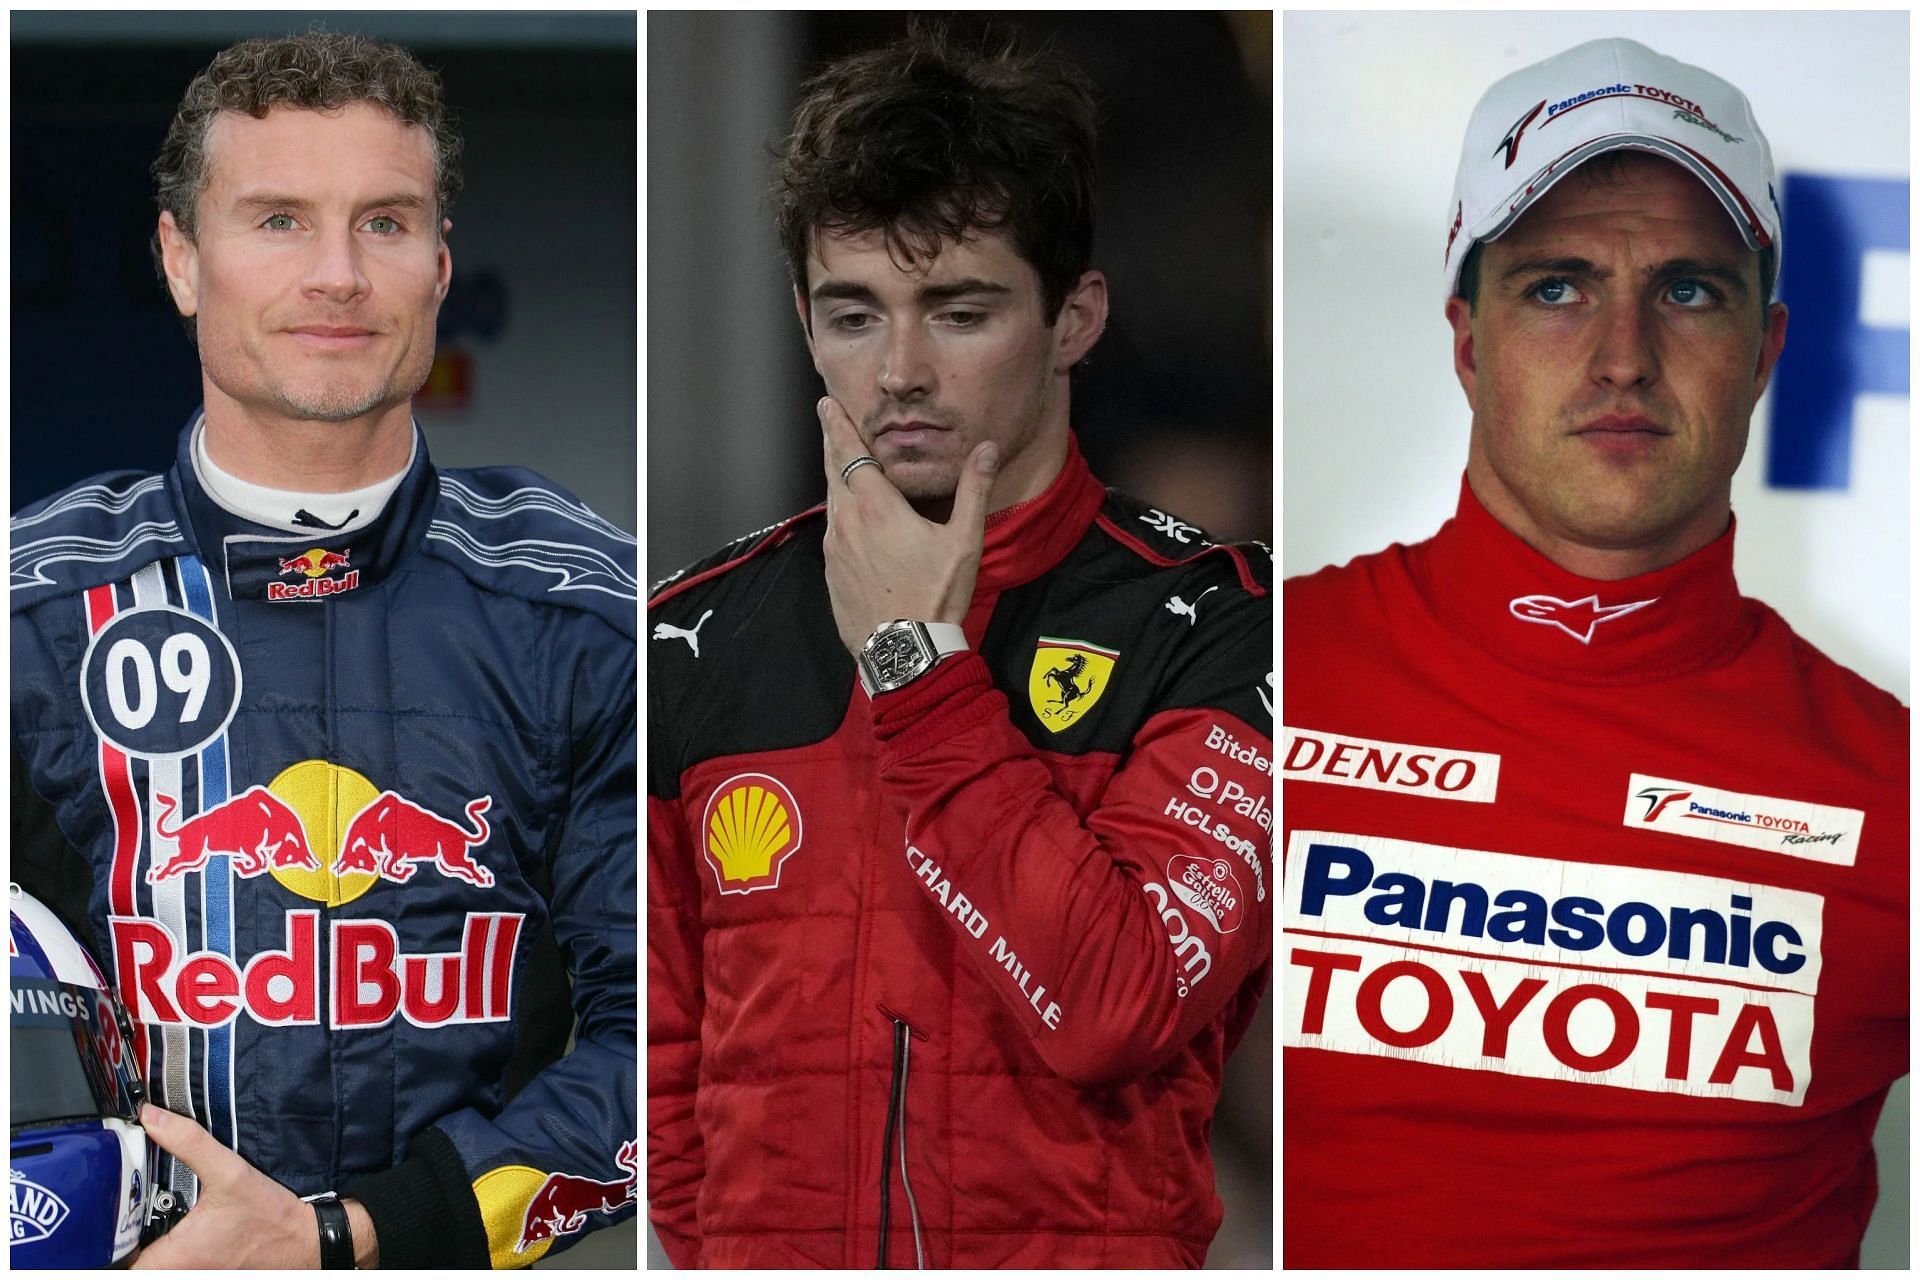 David Coulthard (L), Charles Leclerc (C), and Ralf Schumacher (R) (Collage via Sportskeeda)